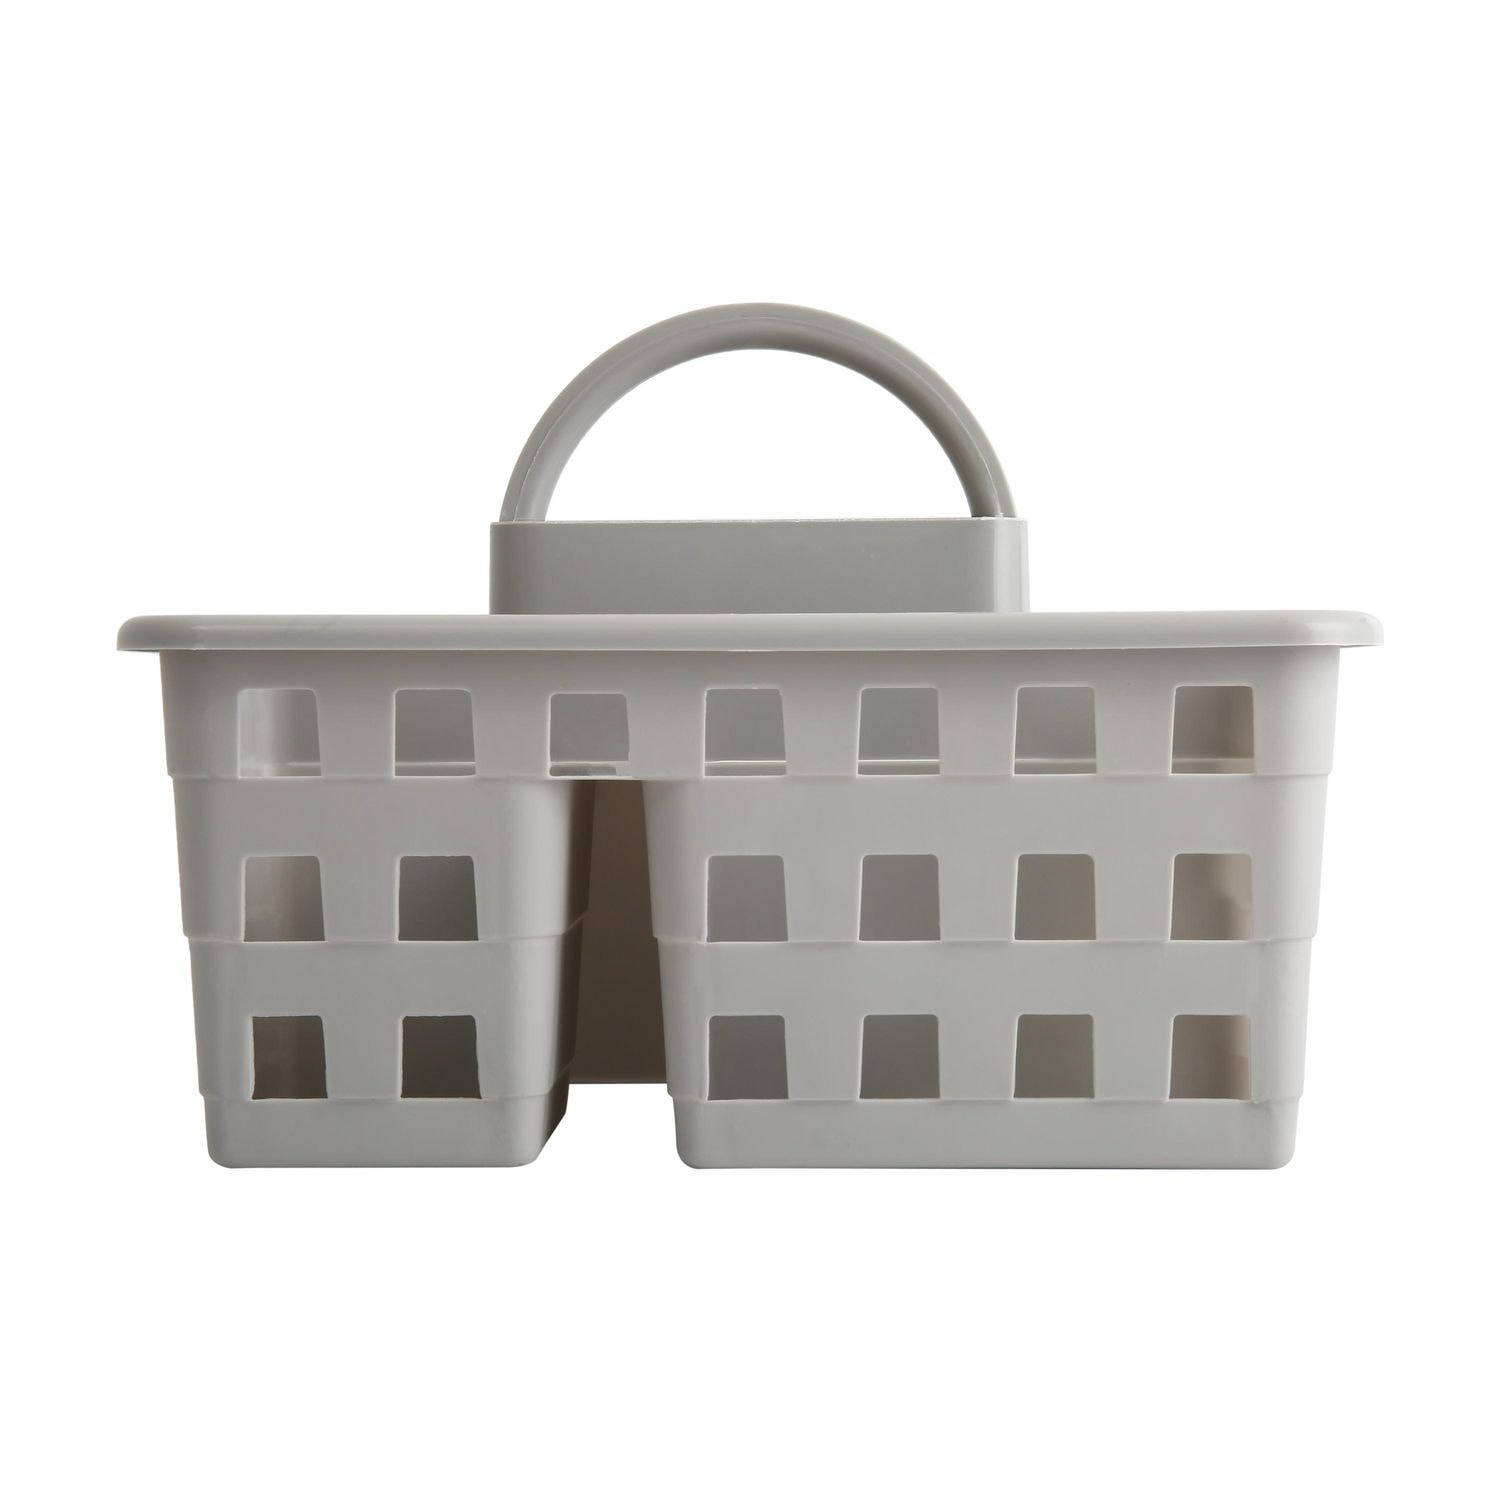 Mainstays Plastic Caddy Craft and Hobby Organizer Basket Gray